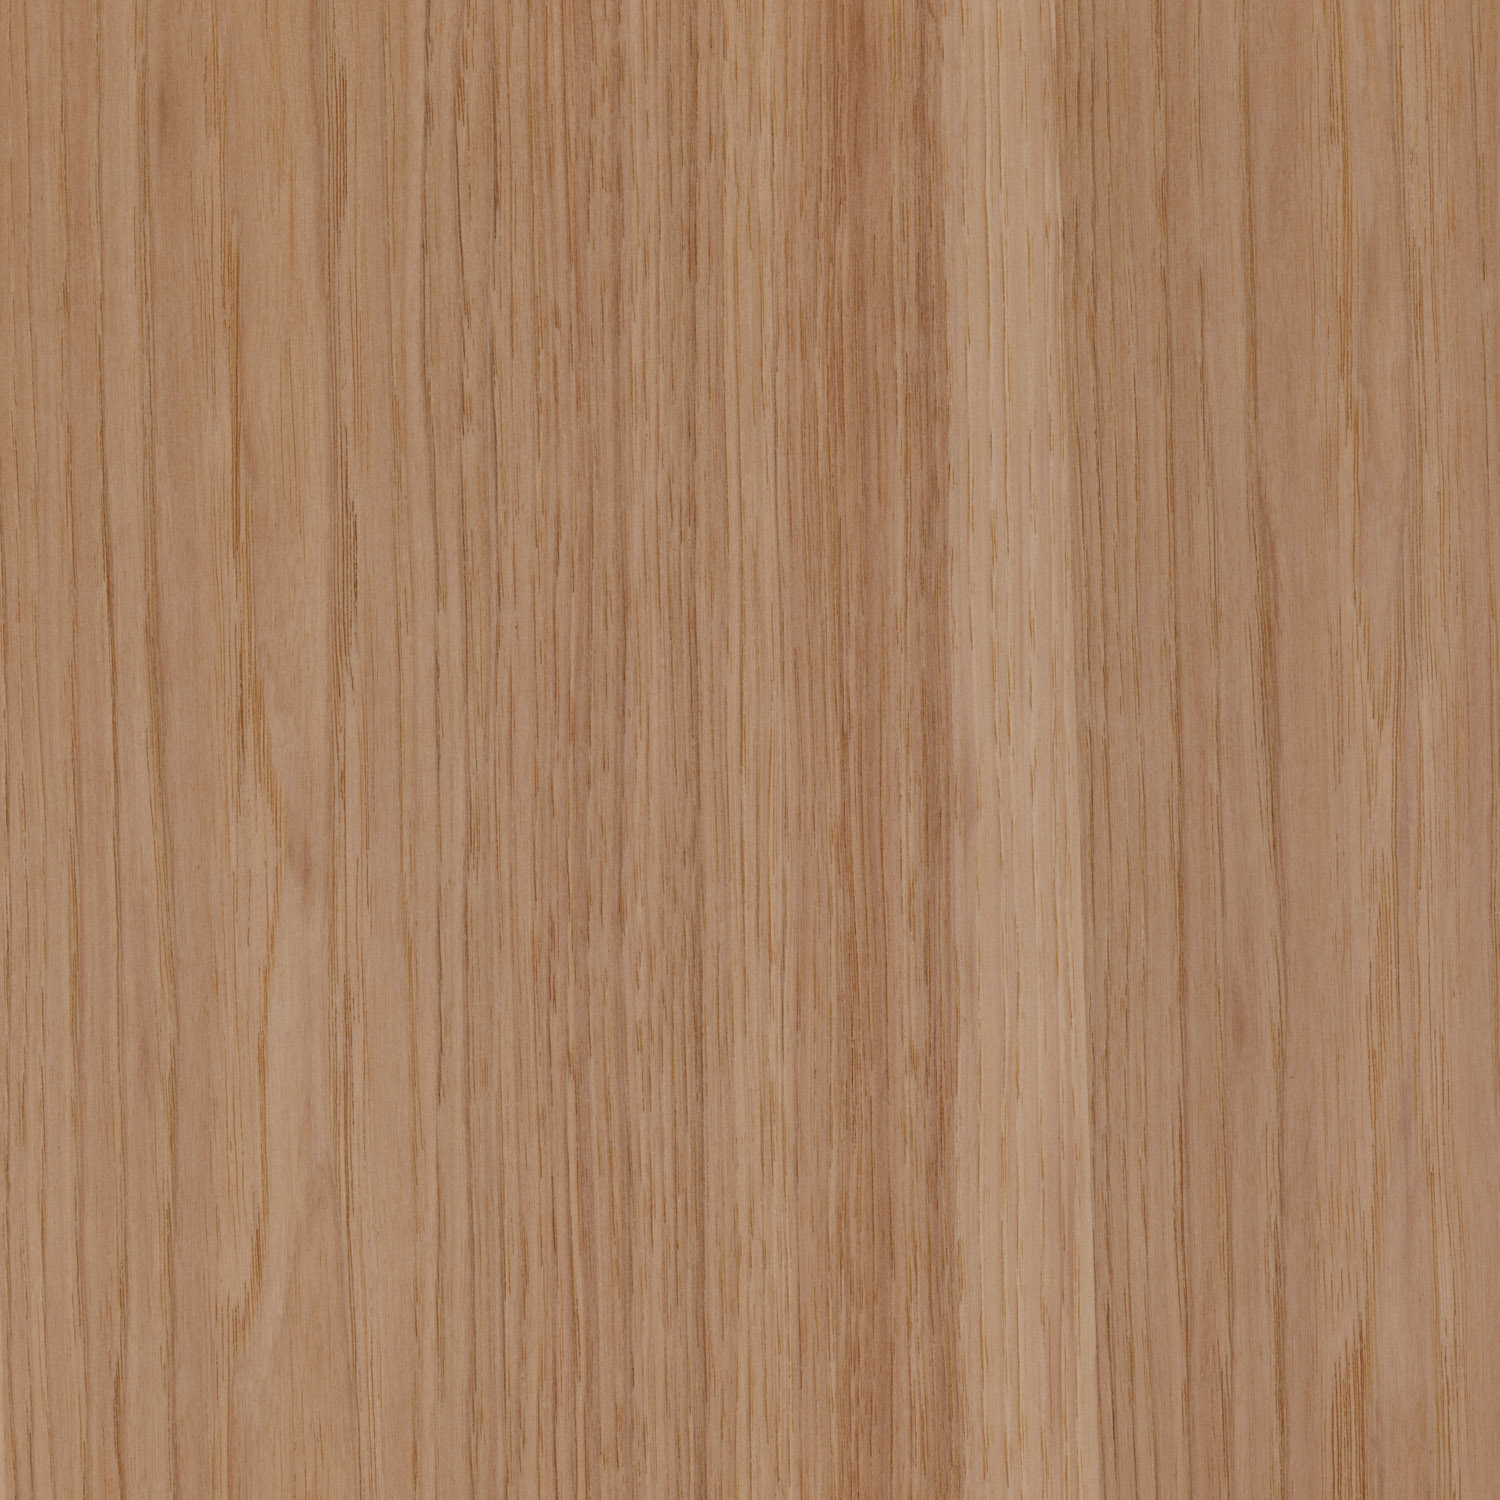 hickory calico natural wood veneer